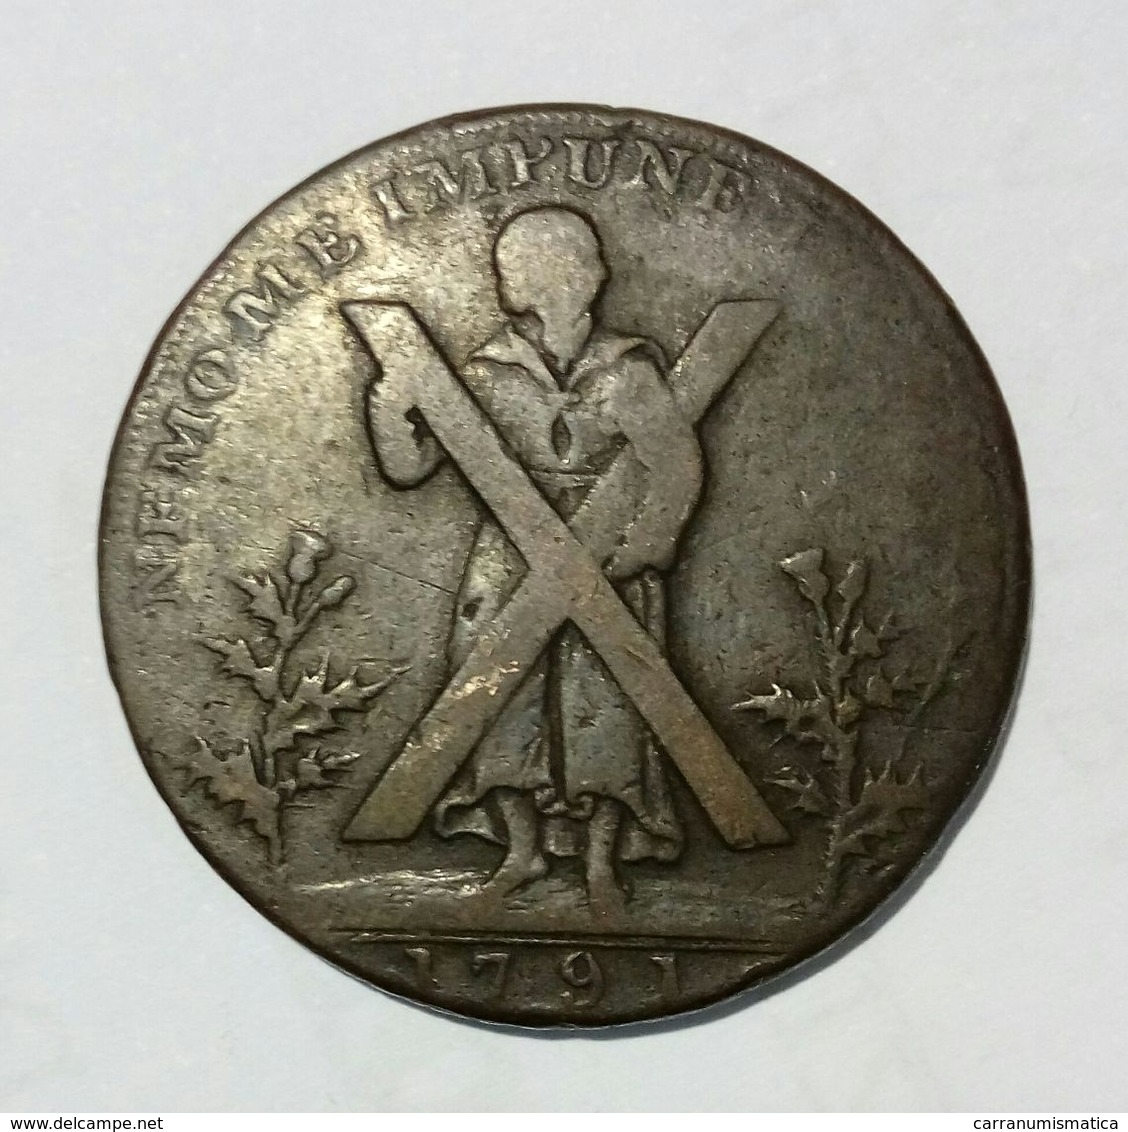 SCOTLAND - EDINBURGH - Half Penny Token (1791) - Monetary/Of Necessity